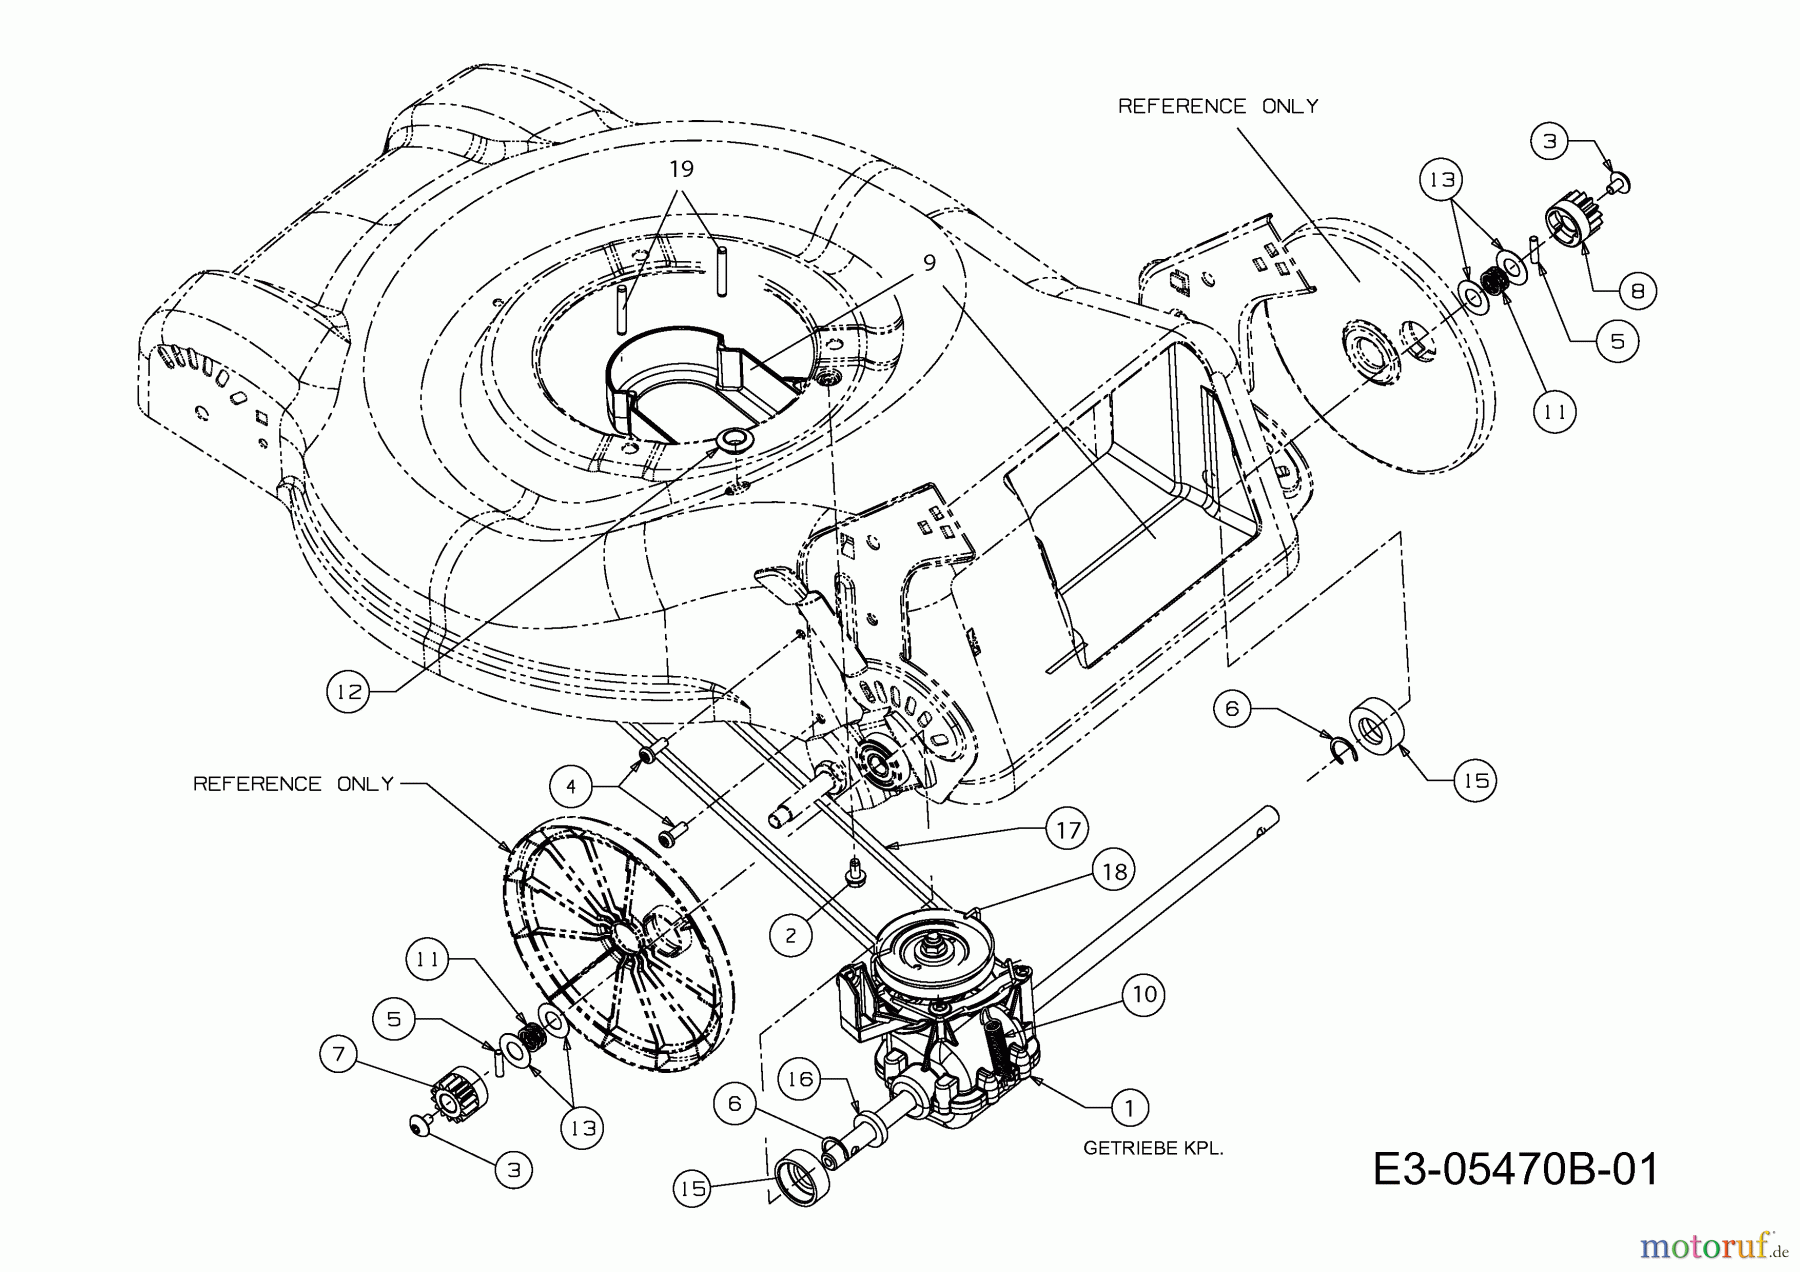  Mastercut Motormäher mit Antrieb SP 460 BL 12D-J20G659  (2011) Getriebe